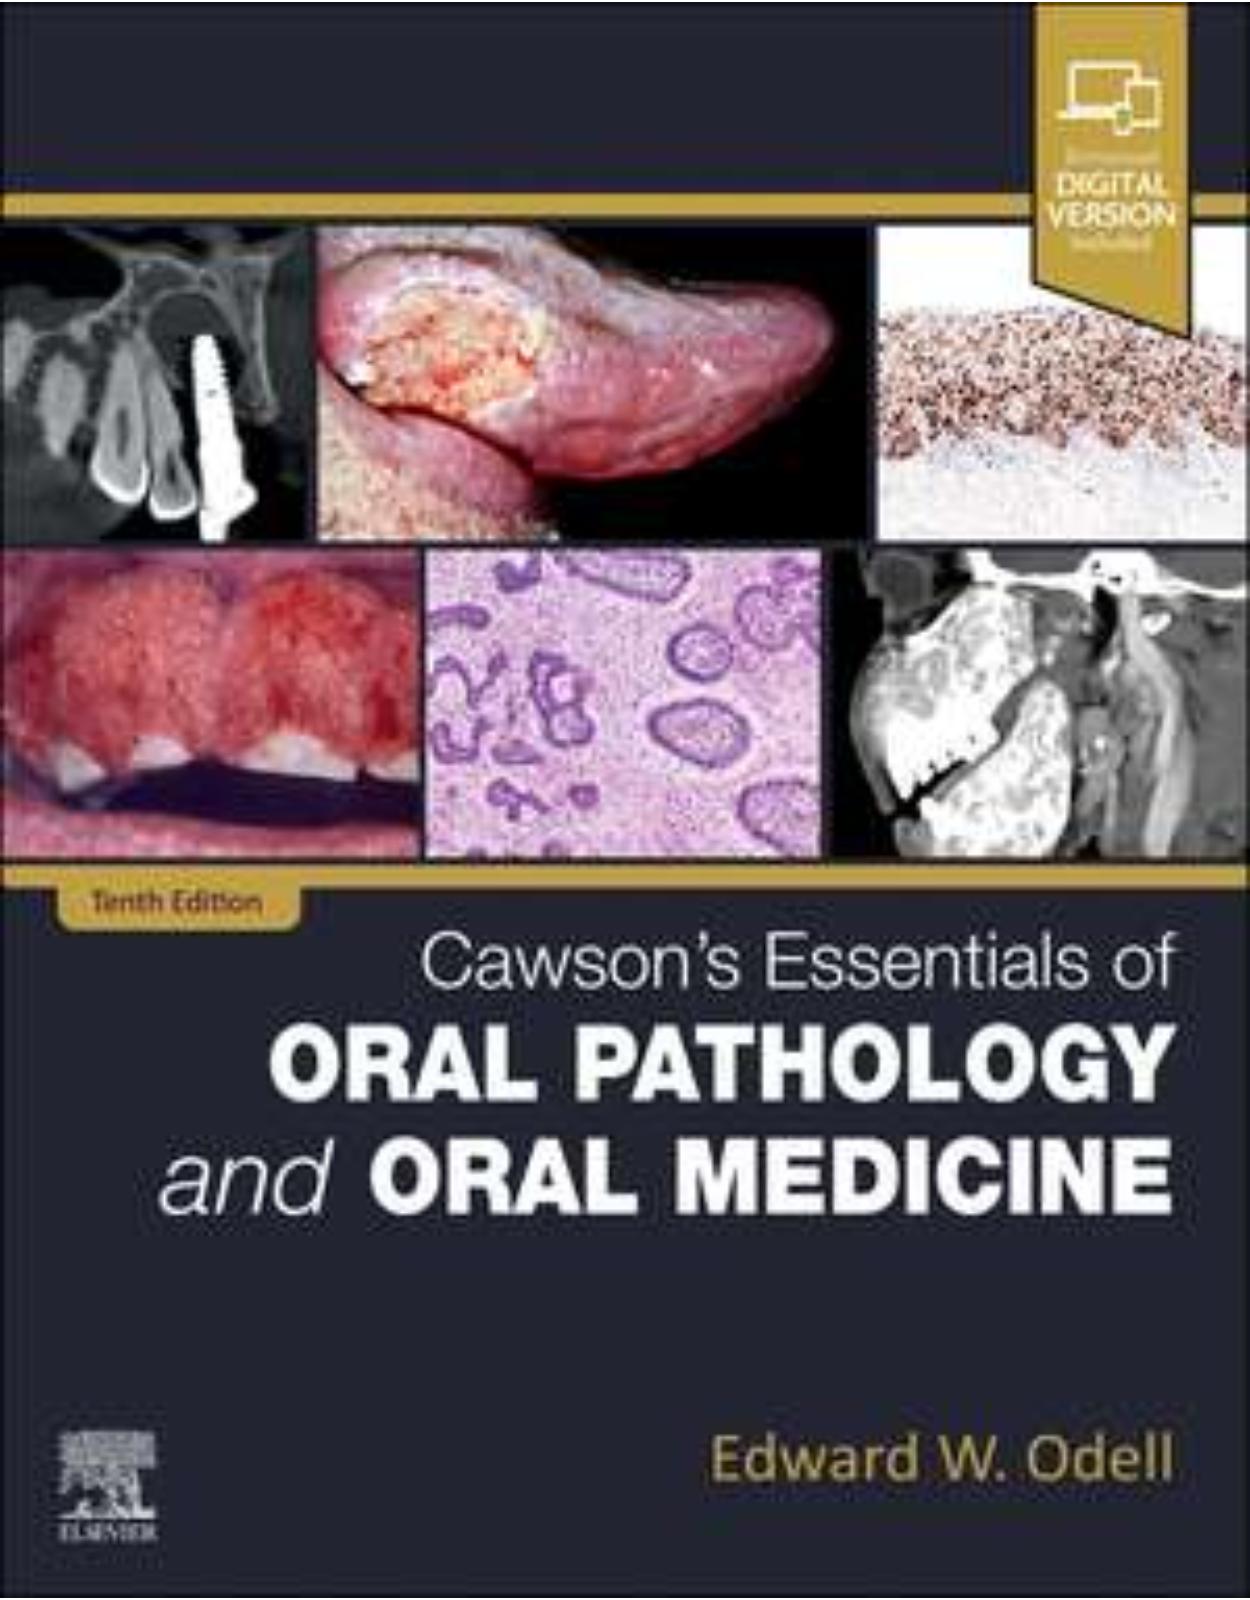 Cawson’s Essentials of Oral Pathology and Oral Medicine